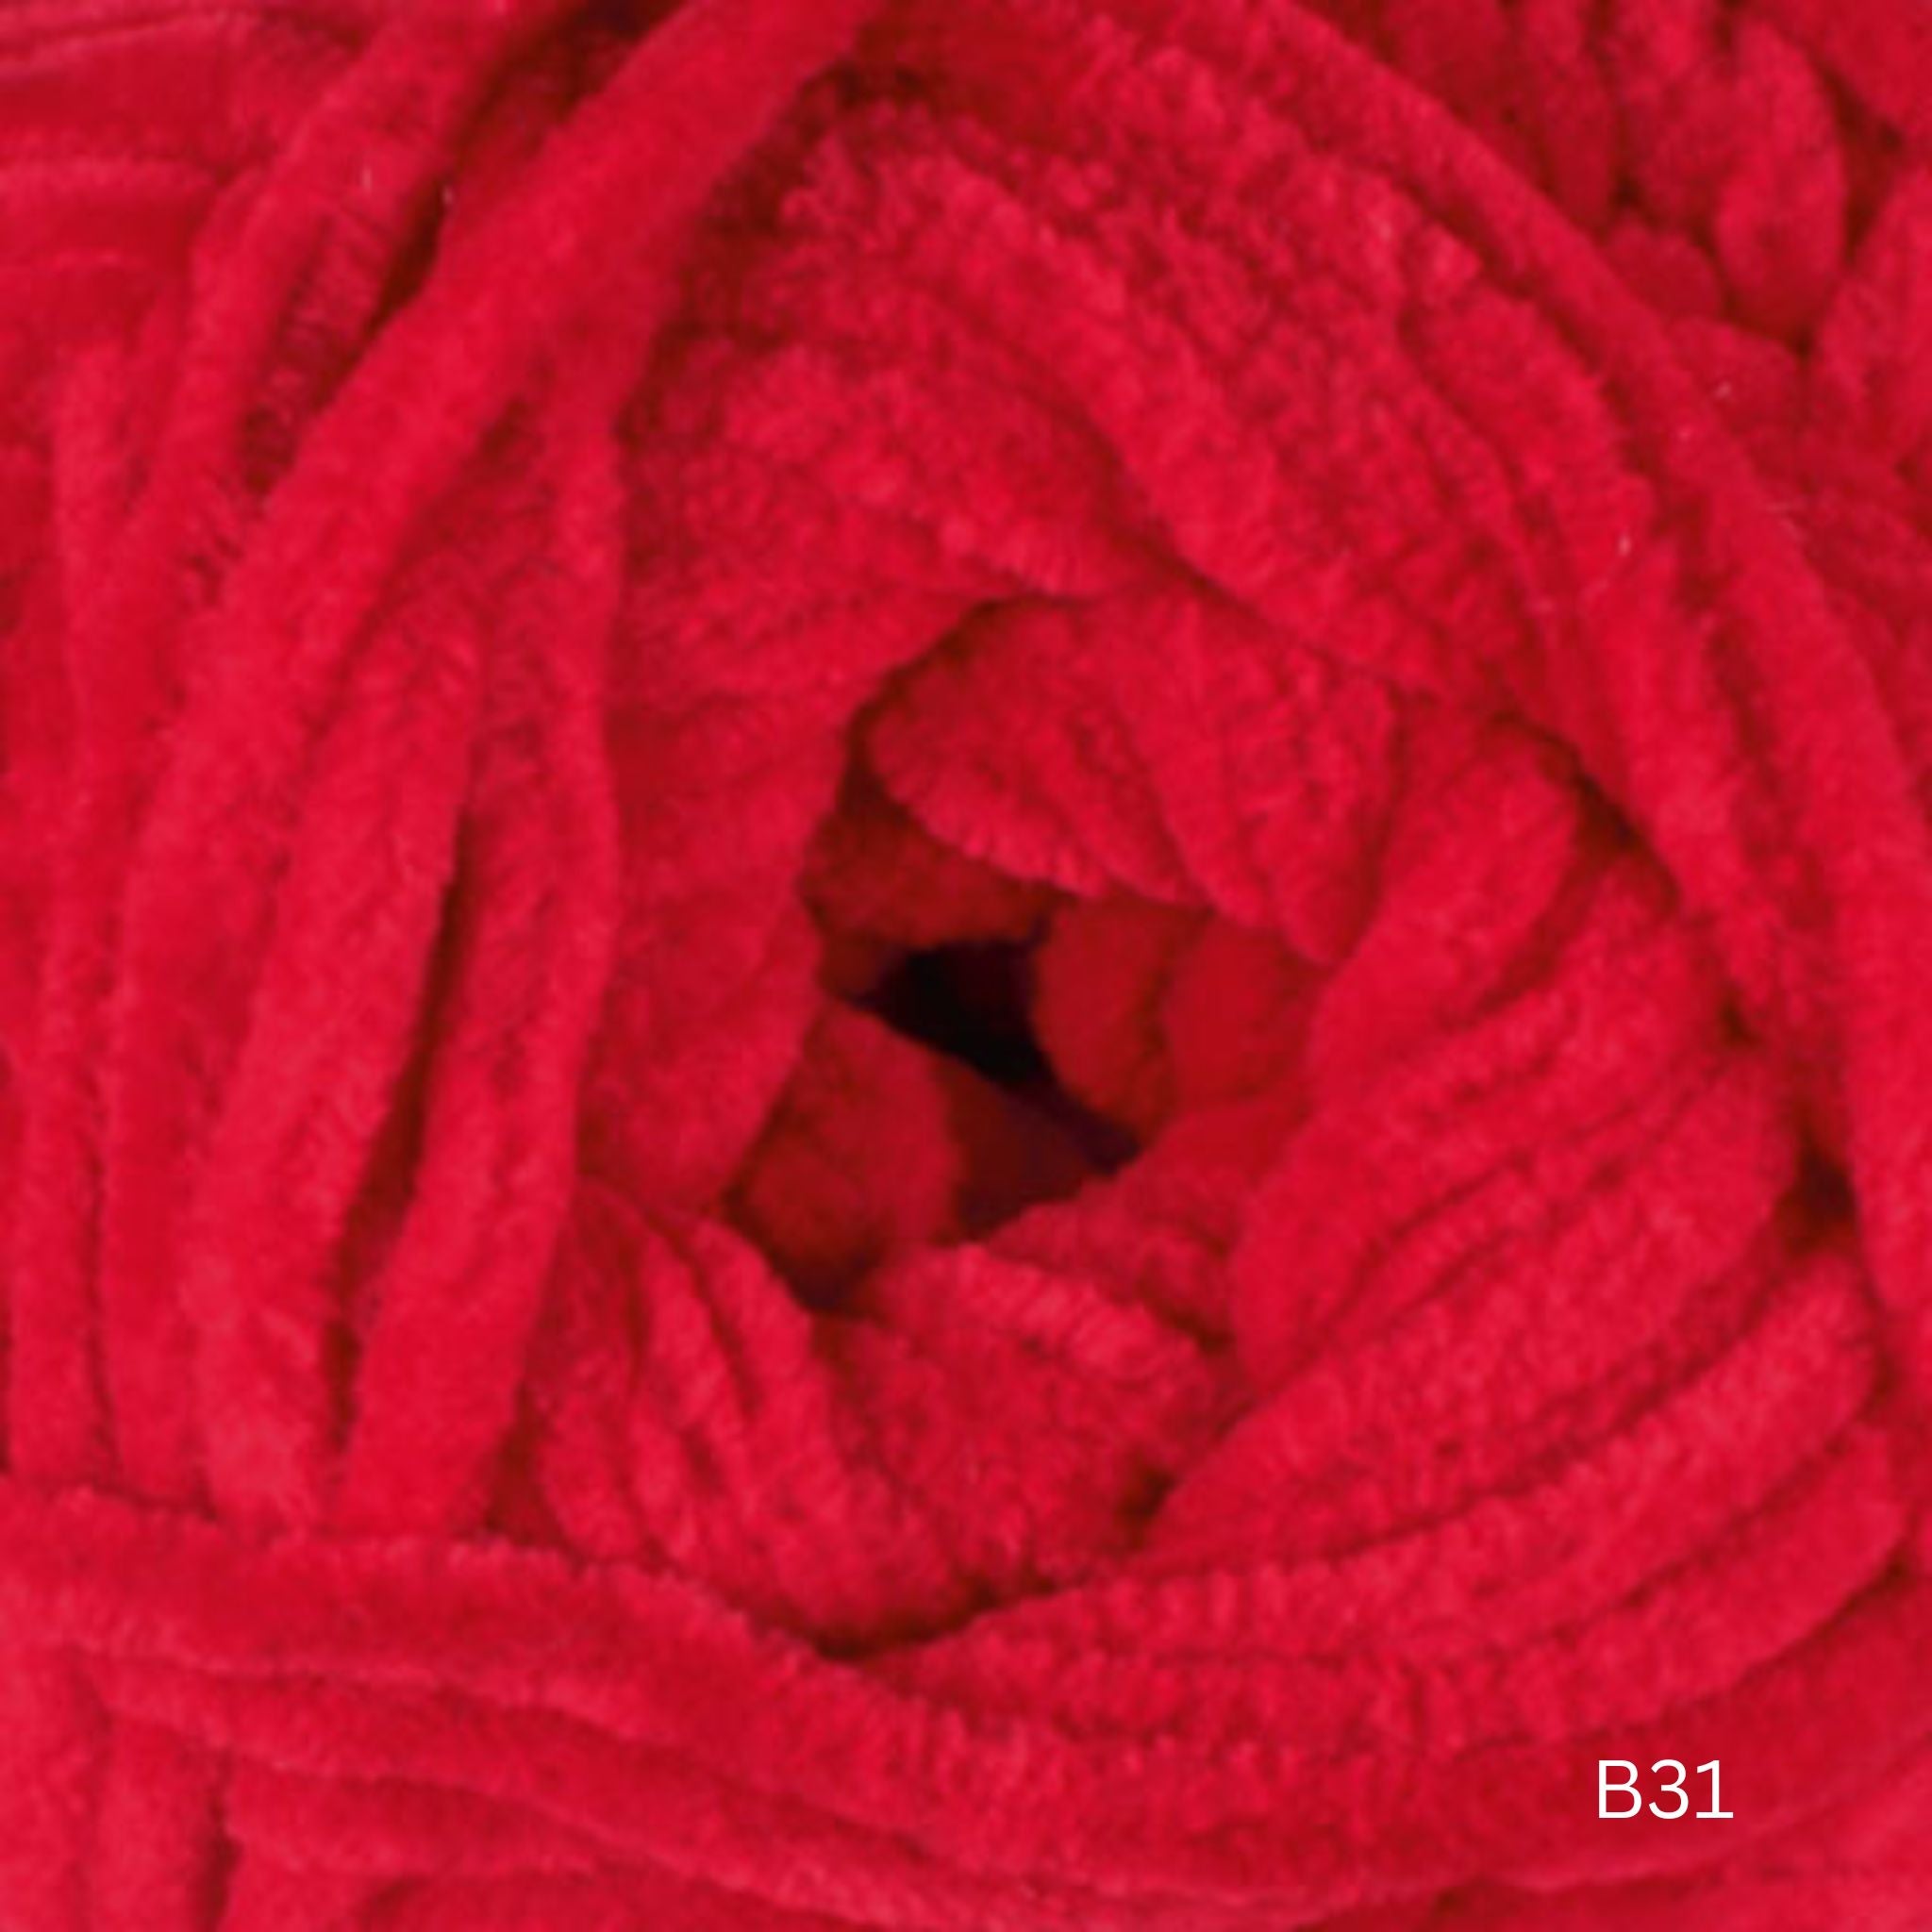 Flutterby chunky yarn - James C. Brett